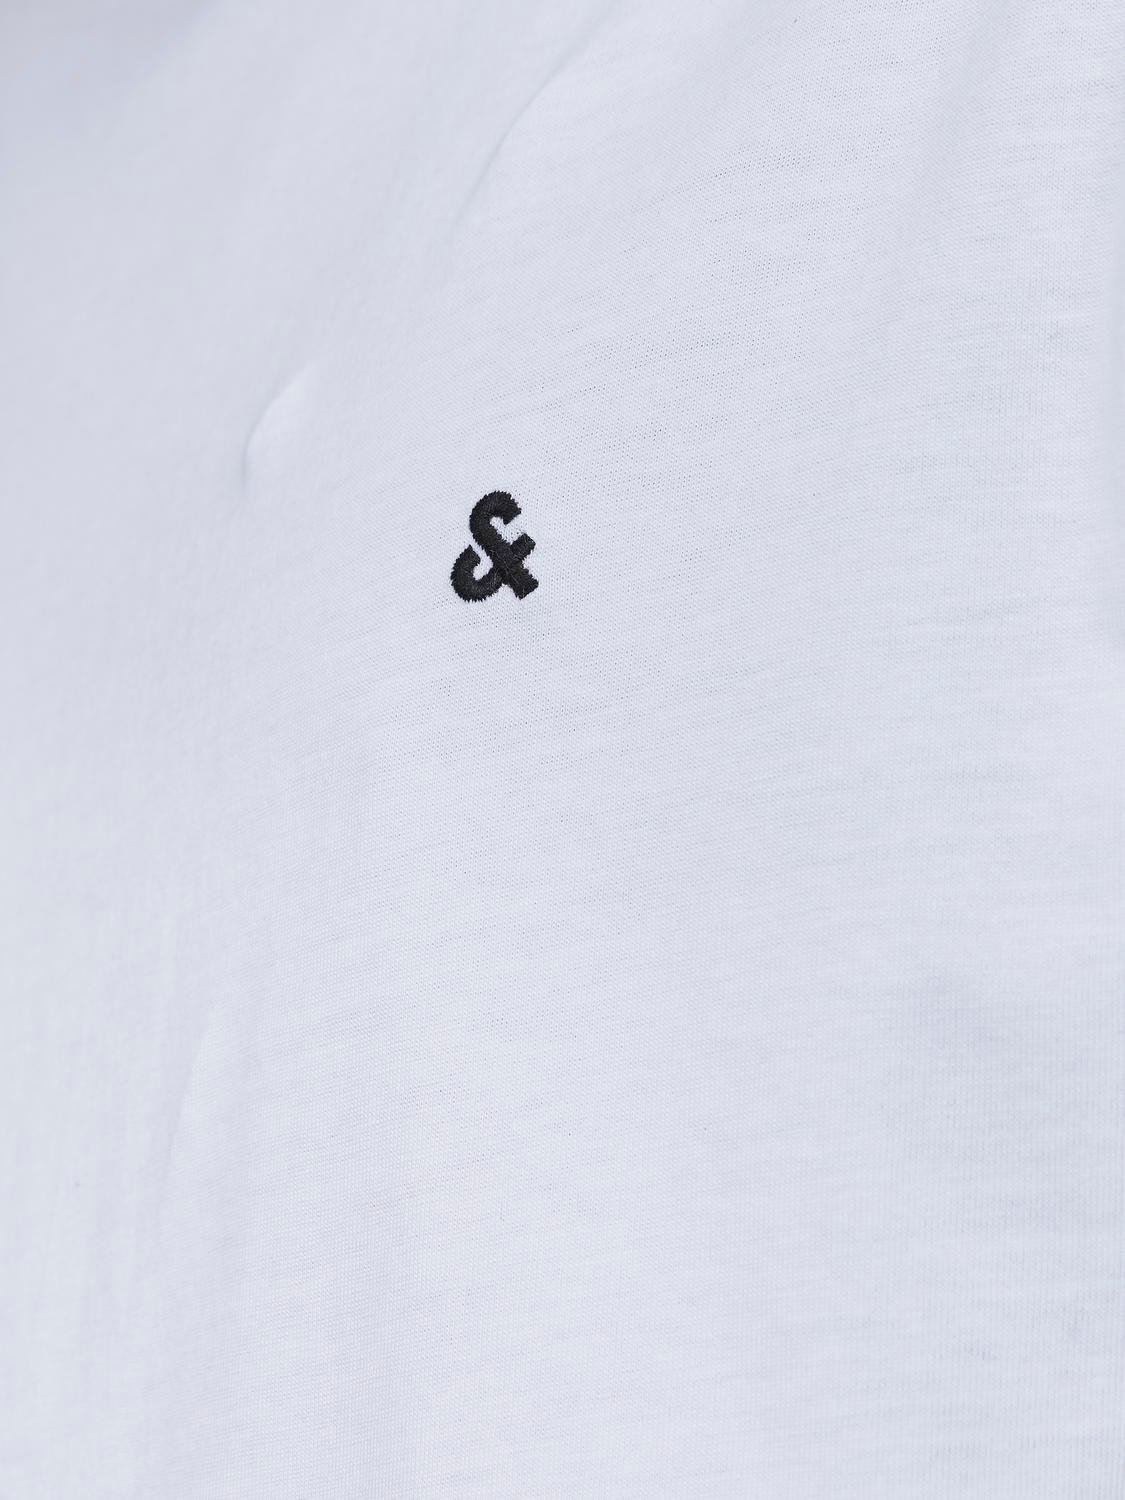 Jack & Jones Camiseta Basic Cuello redondo -White - 12245087